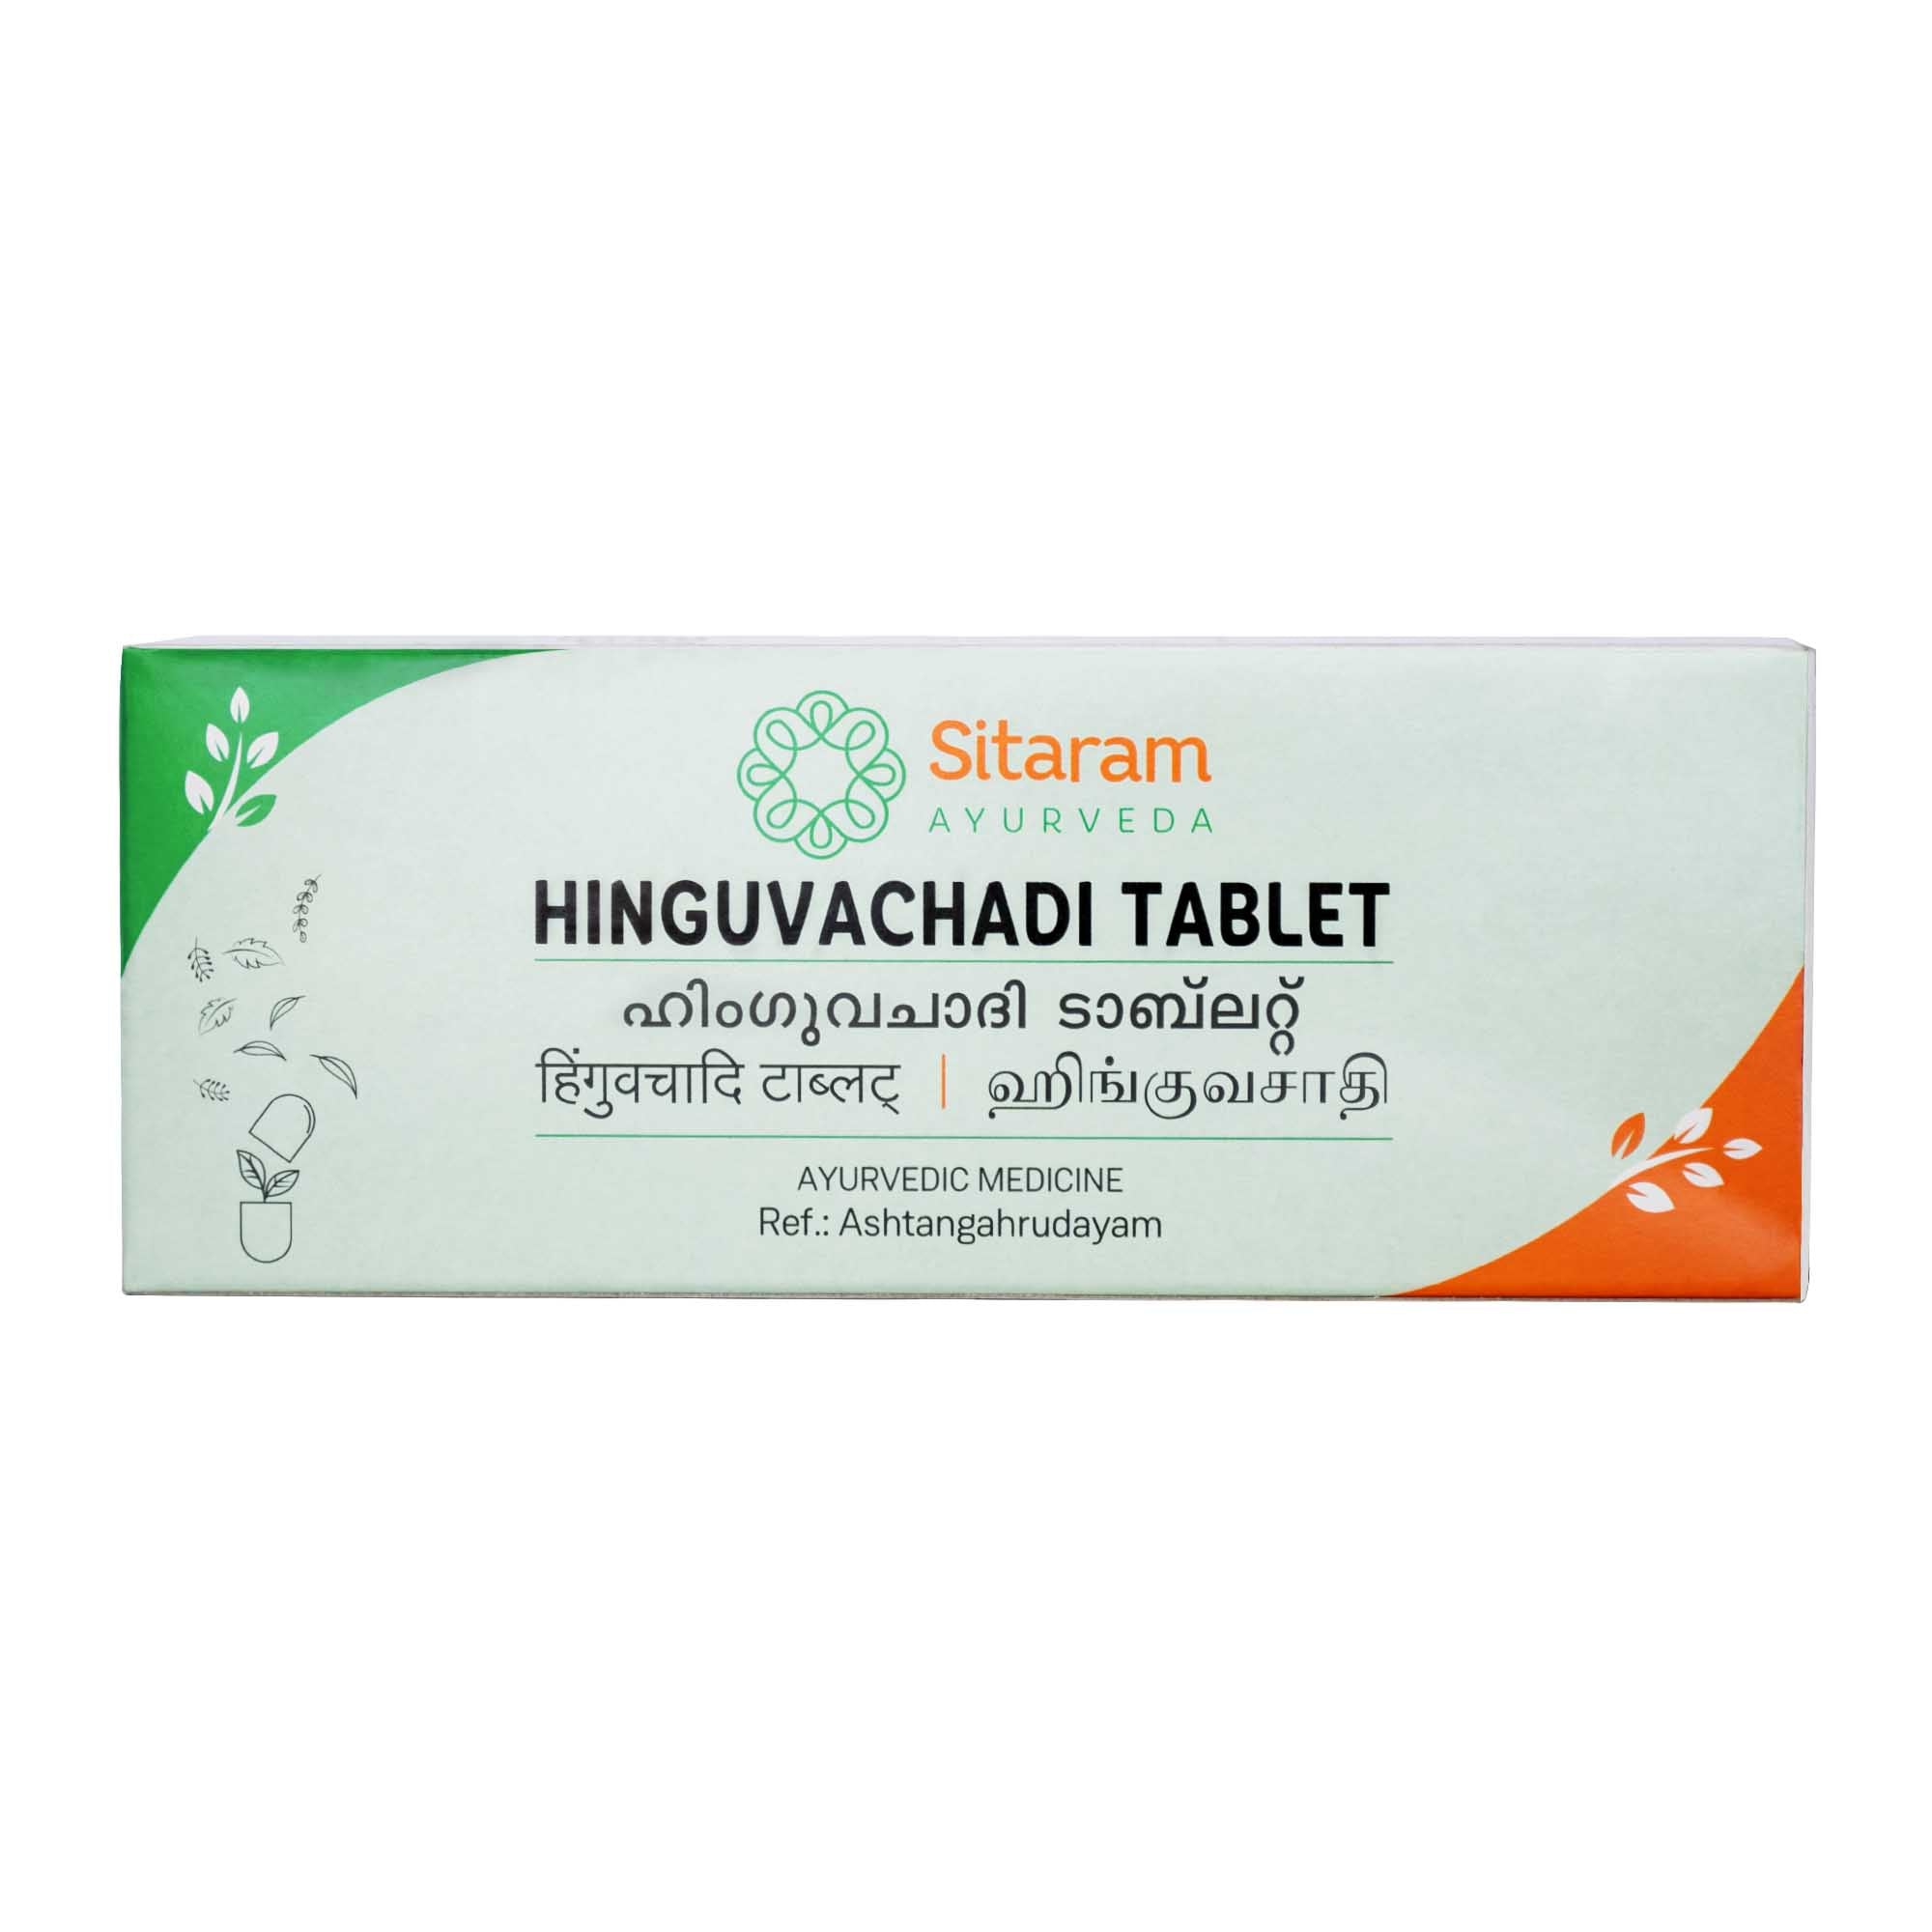 Sitaram Ayurveda Hinguvachadi Tablet 100Nos (Prescription Medication)